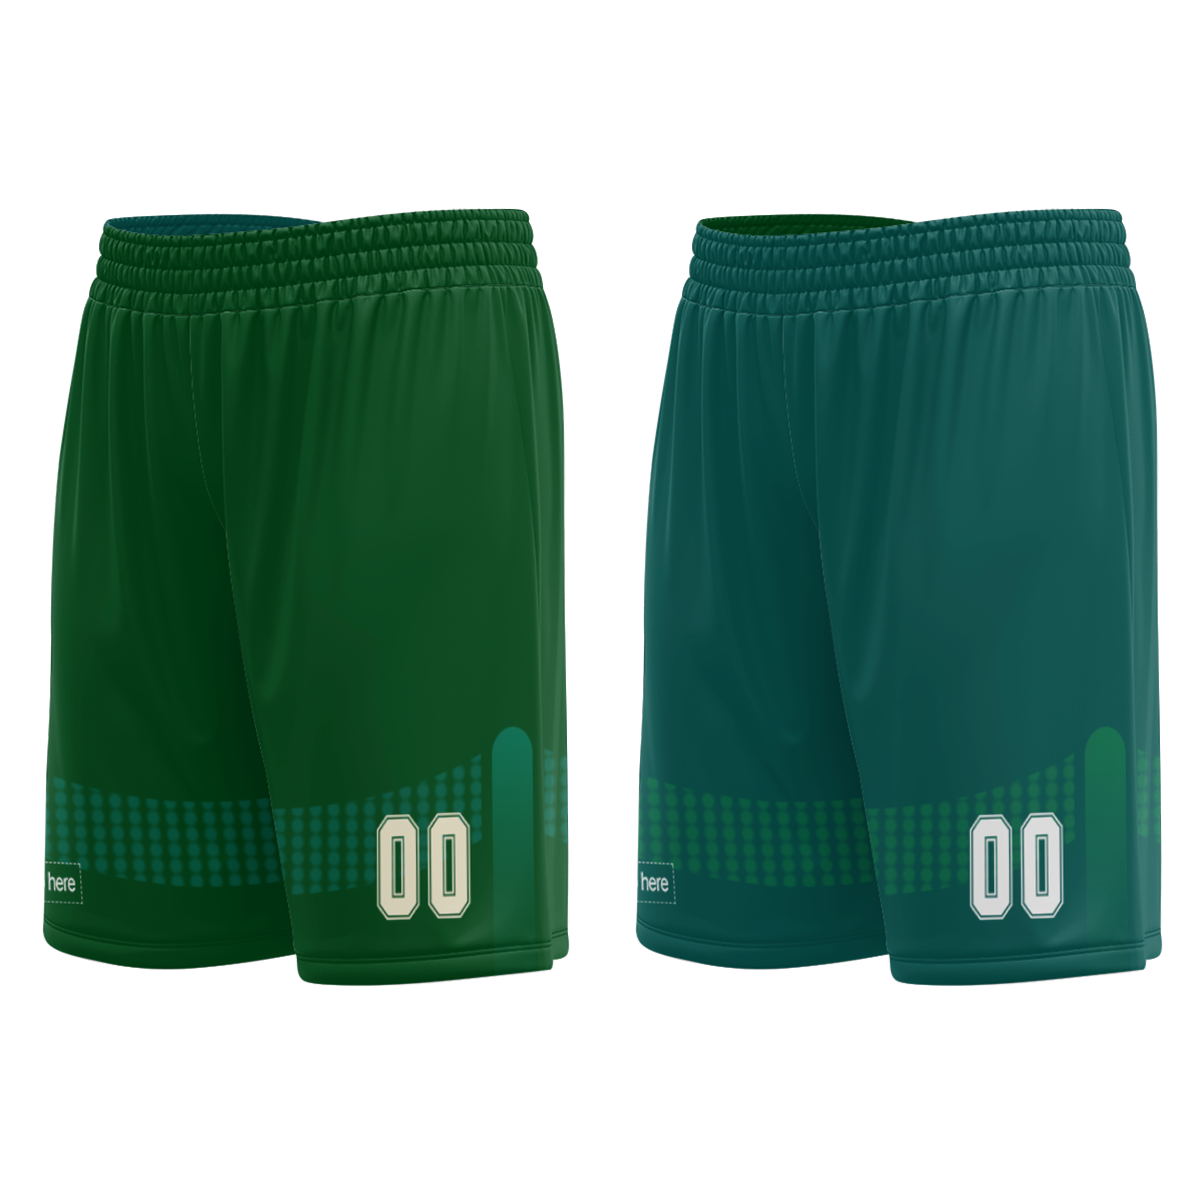 custom-sublimation-polyester-crewneck-quick-dry-club-basketball-jersey-blank-basketball-uniforms-sets-at-cj-pod-8